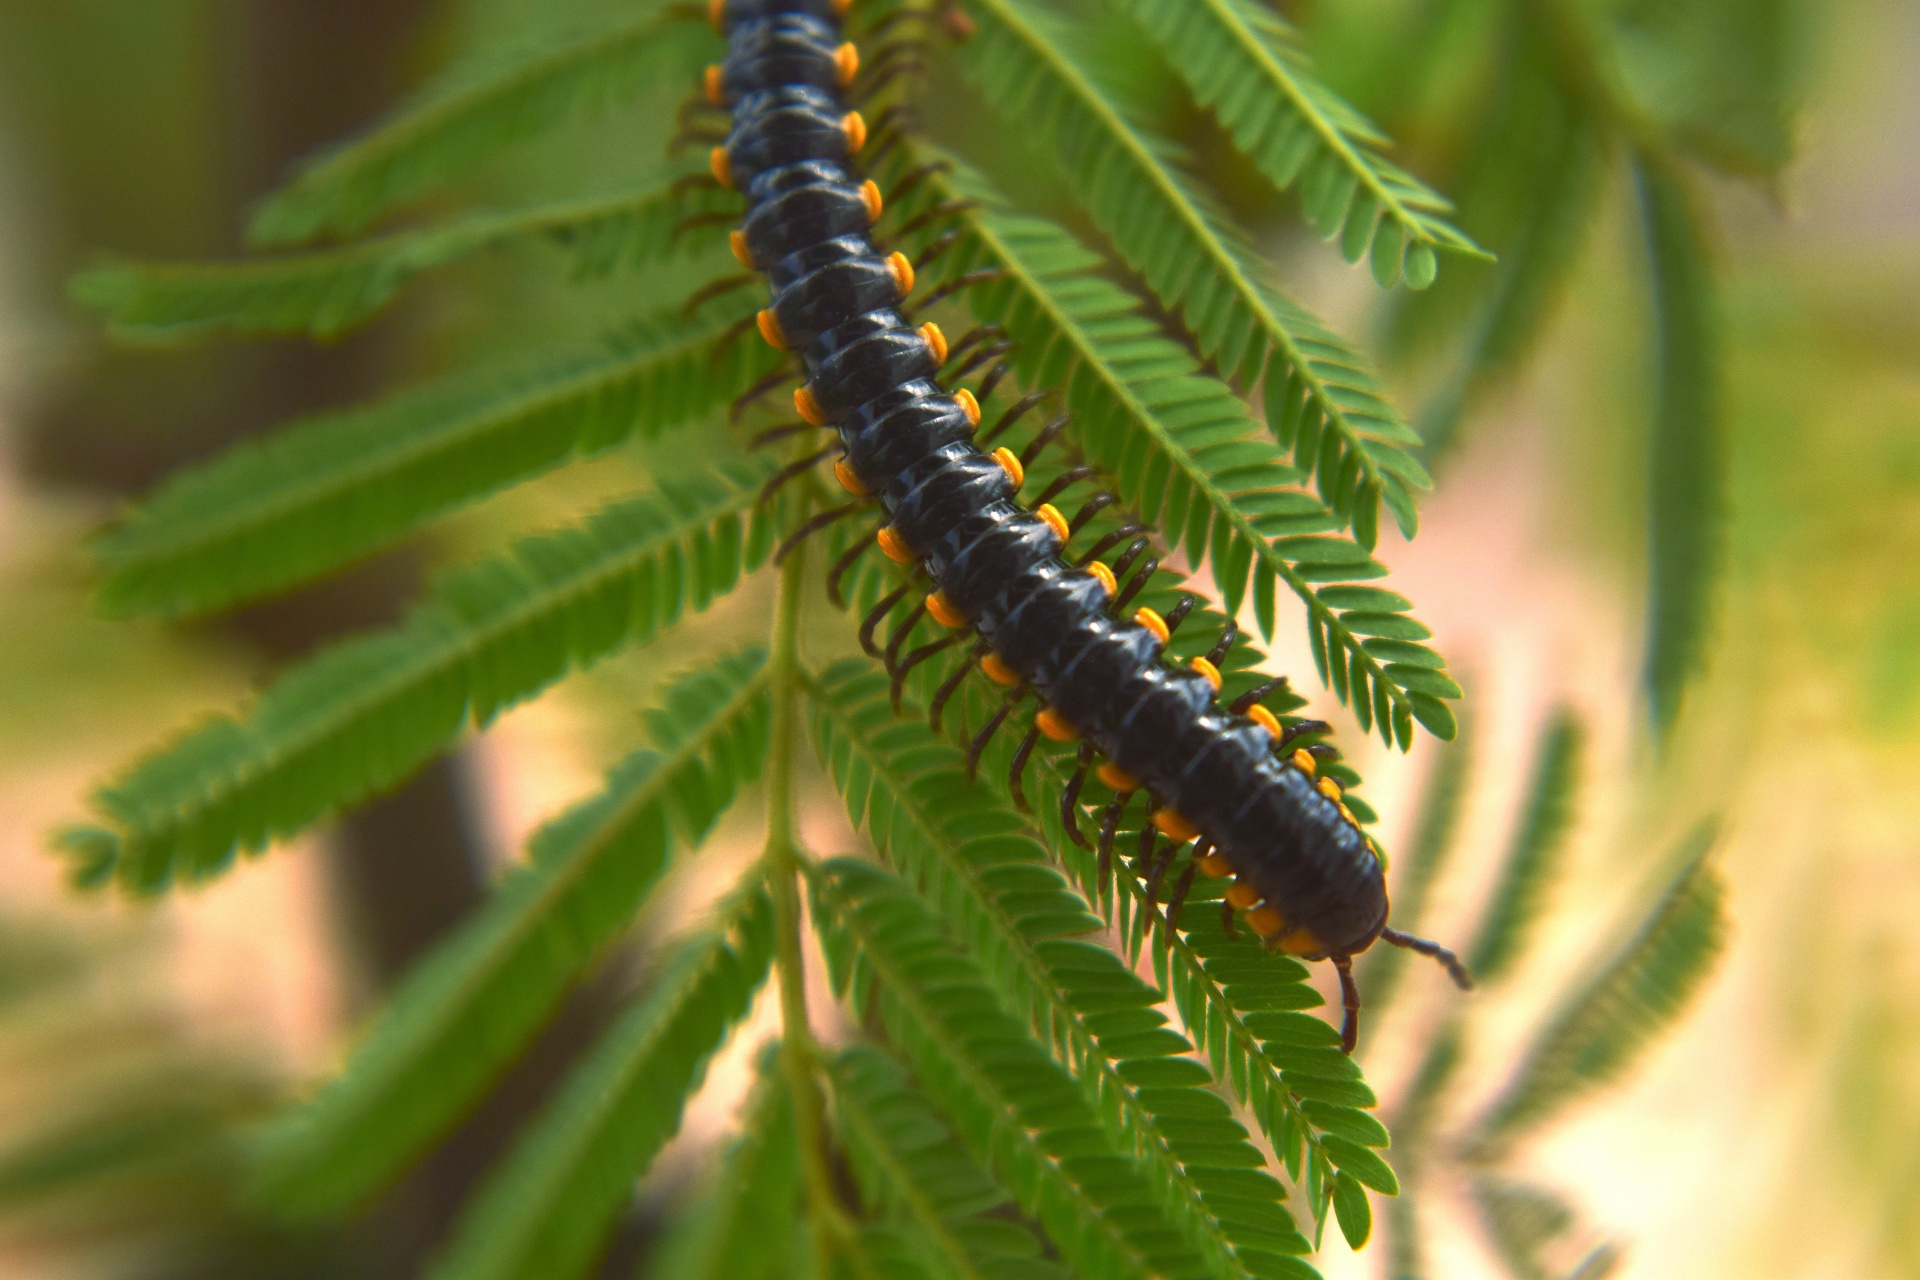 centipede worm creature free photo